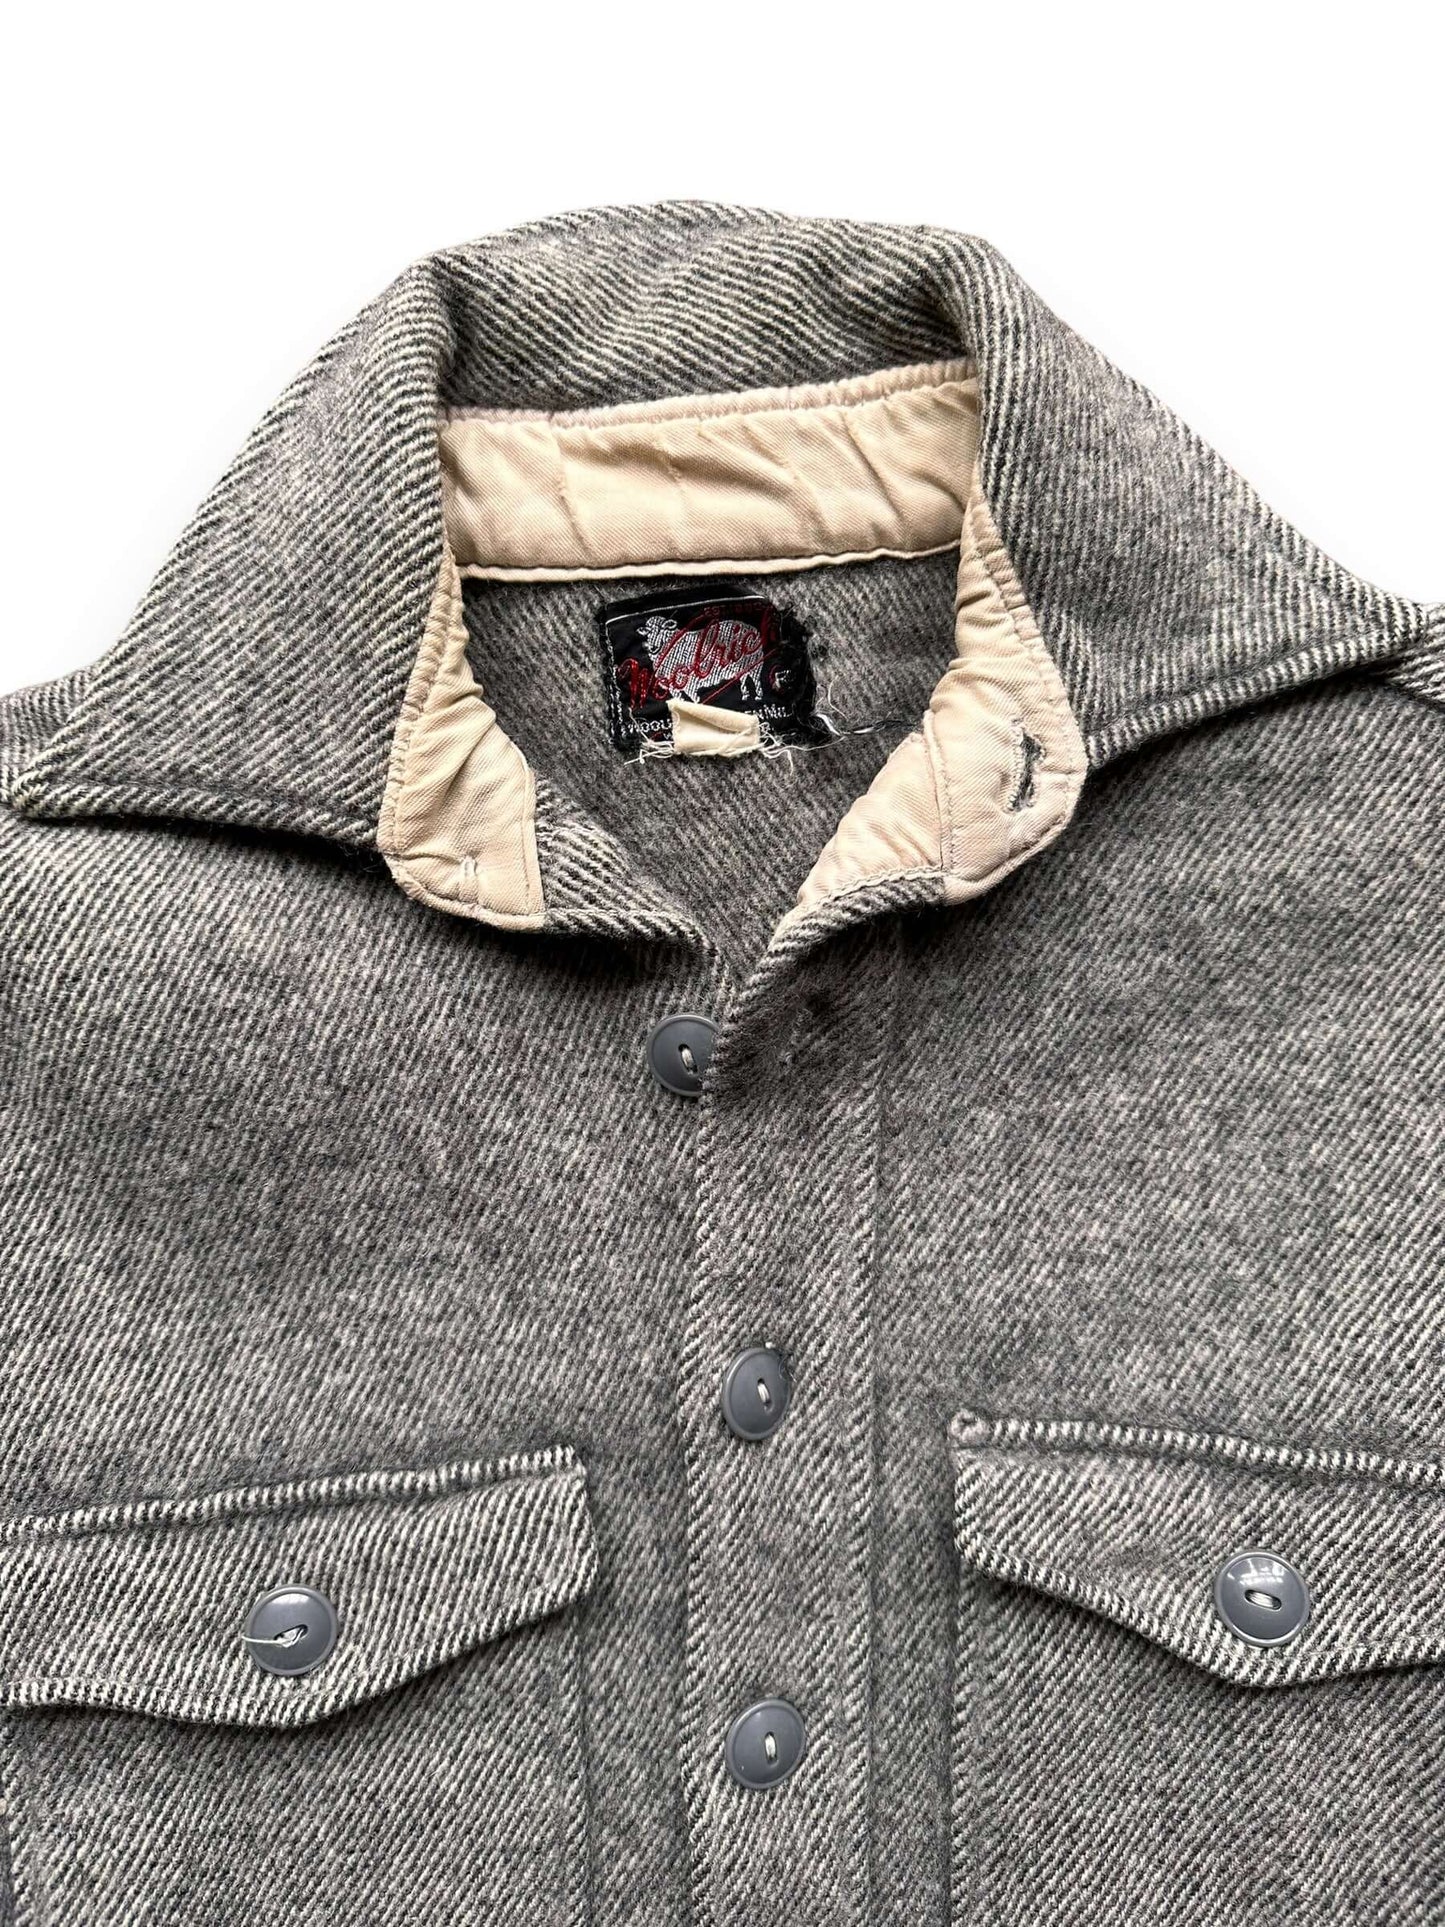 Tag View of Vintage Woolrich Shirt Jacket SZ M | Vintage Workwear Seattle